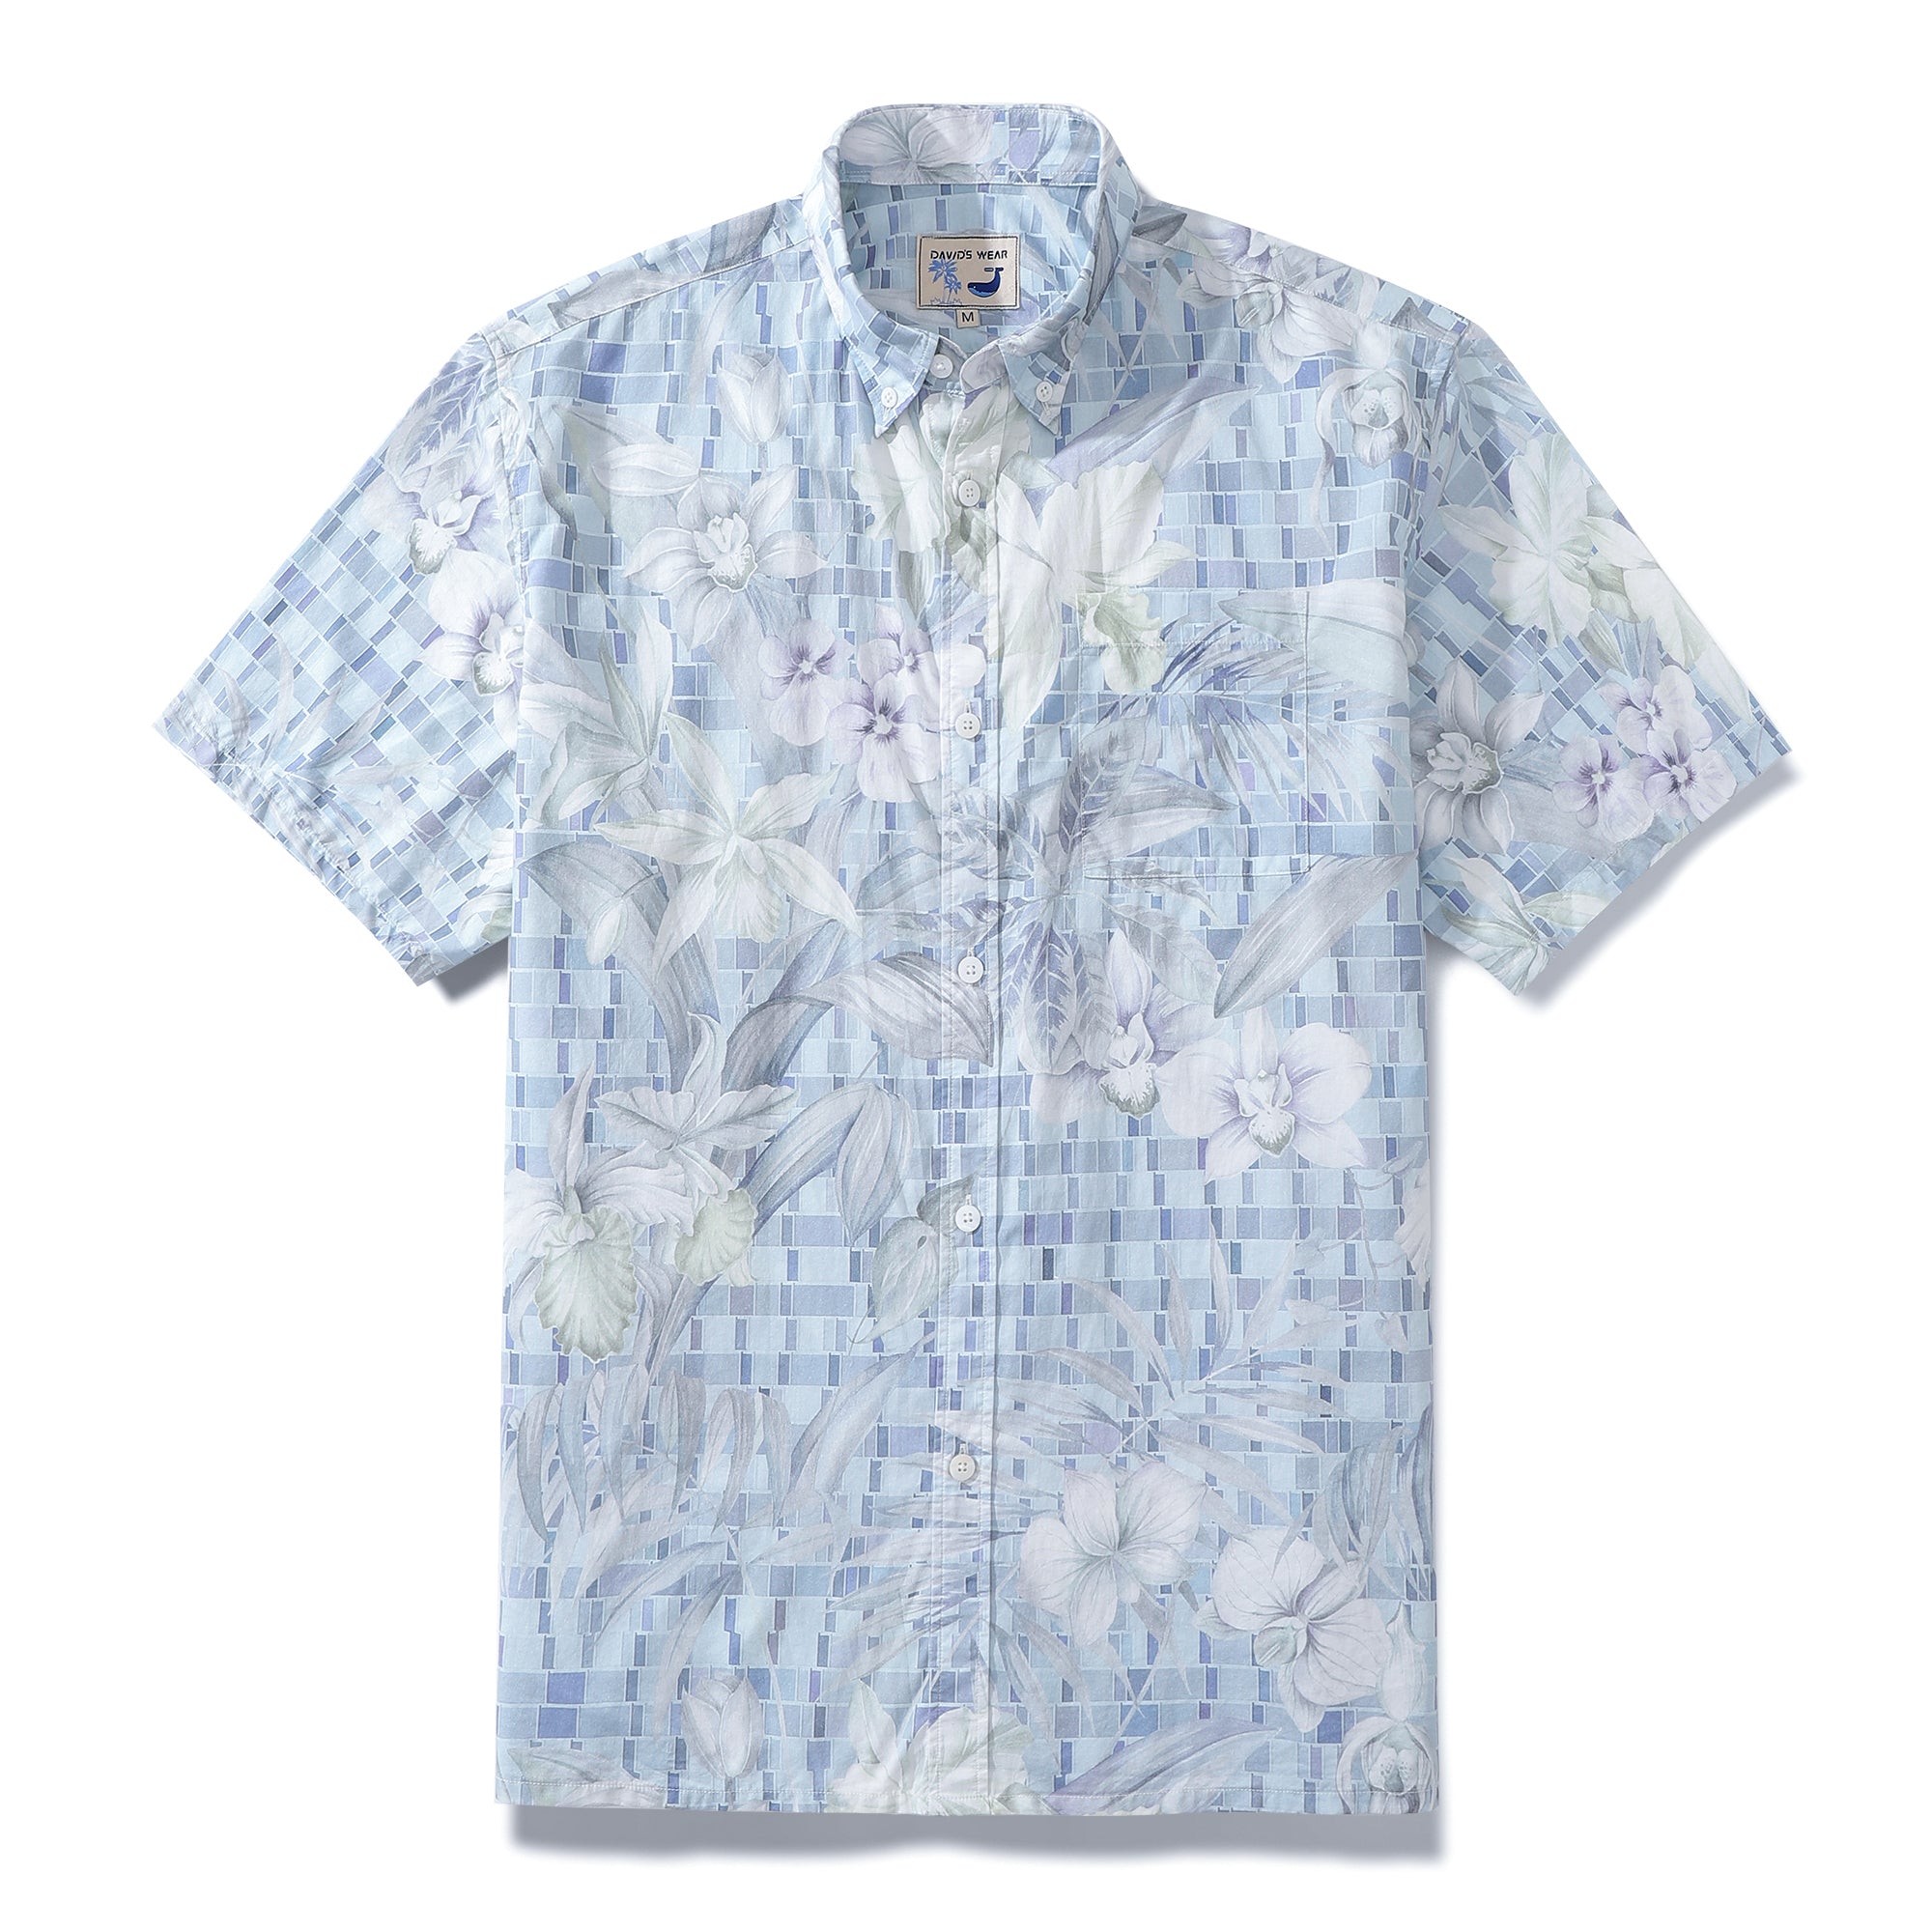 Hawaiian Shirt For Men Light Blue Floral Print Vintage Aloha Shirt Short Sleeve